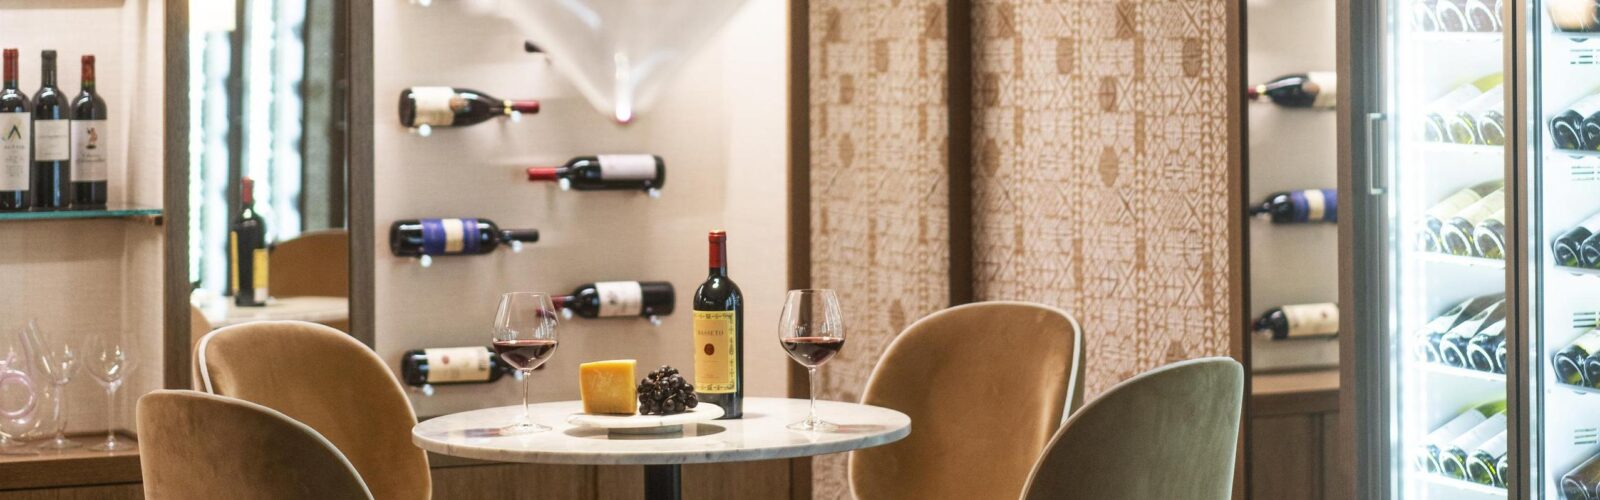 Wine bar in Croatia Hotel Bellevue Dubrovnik